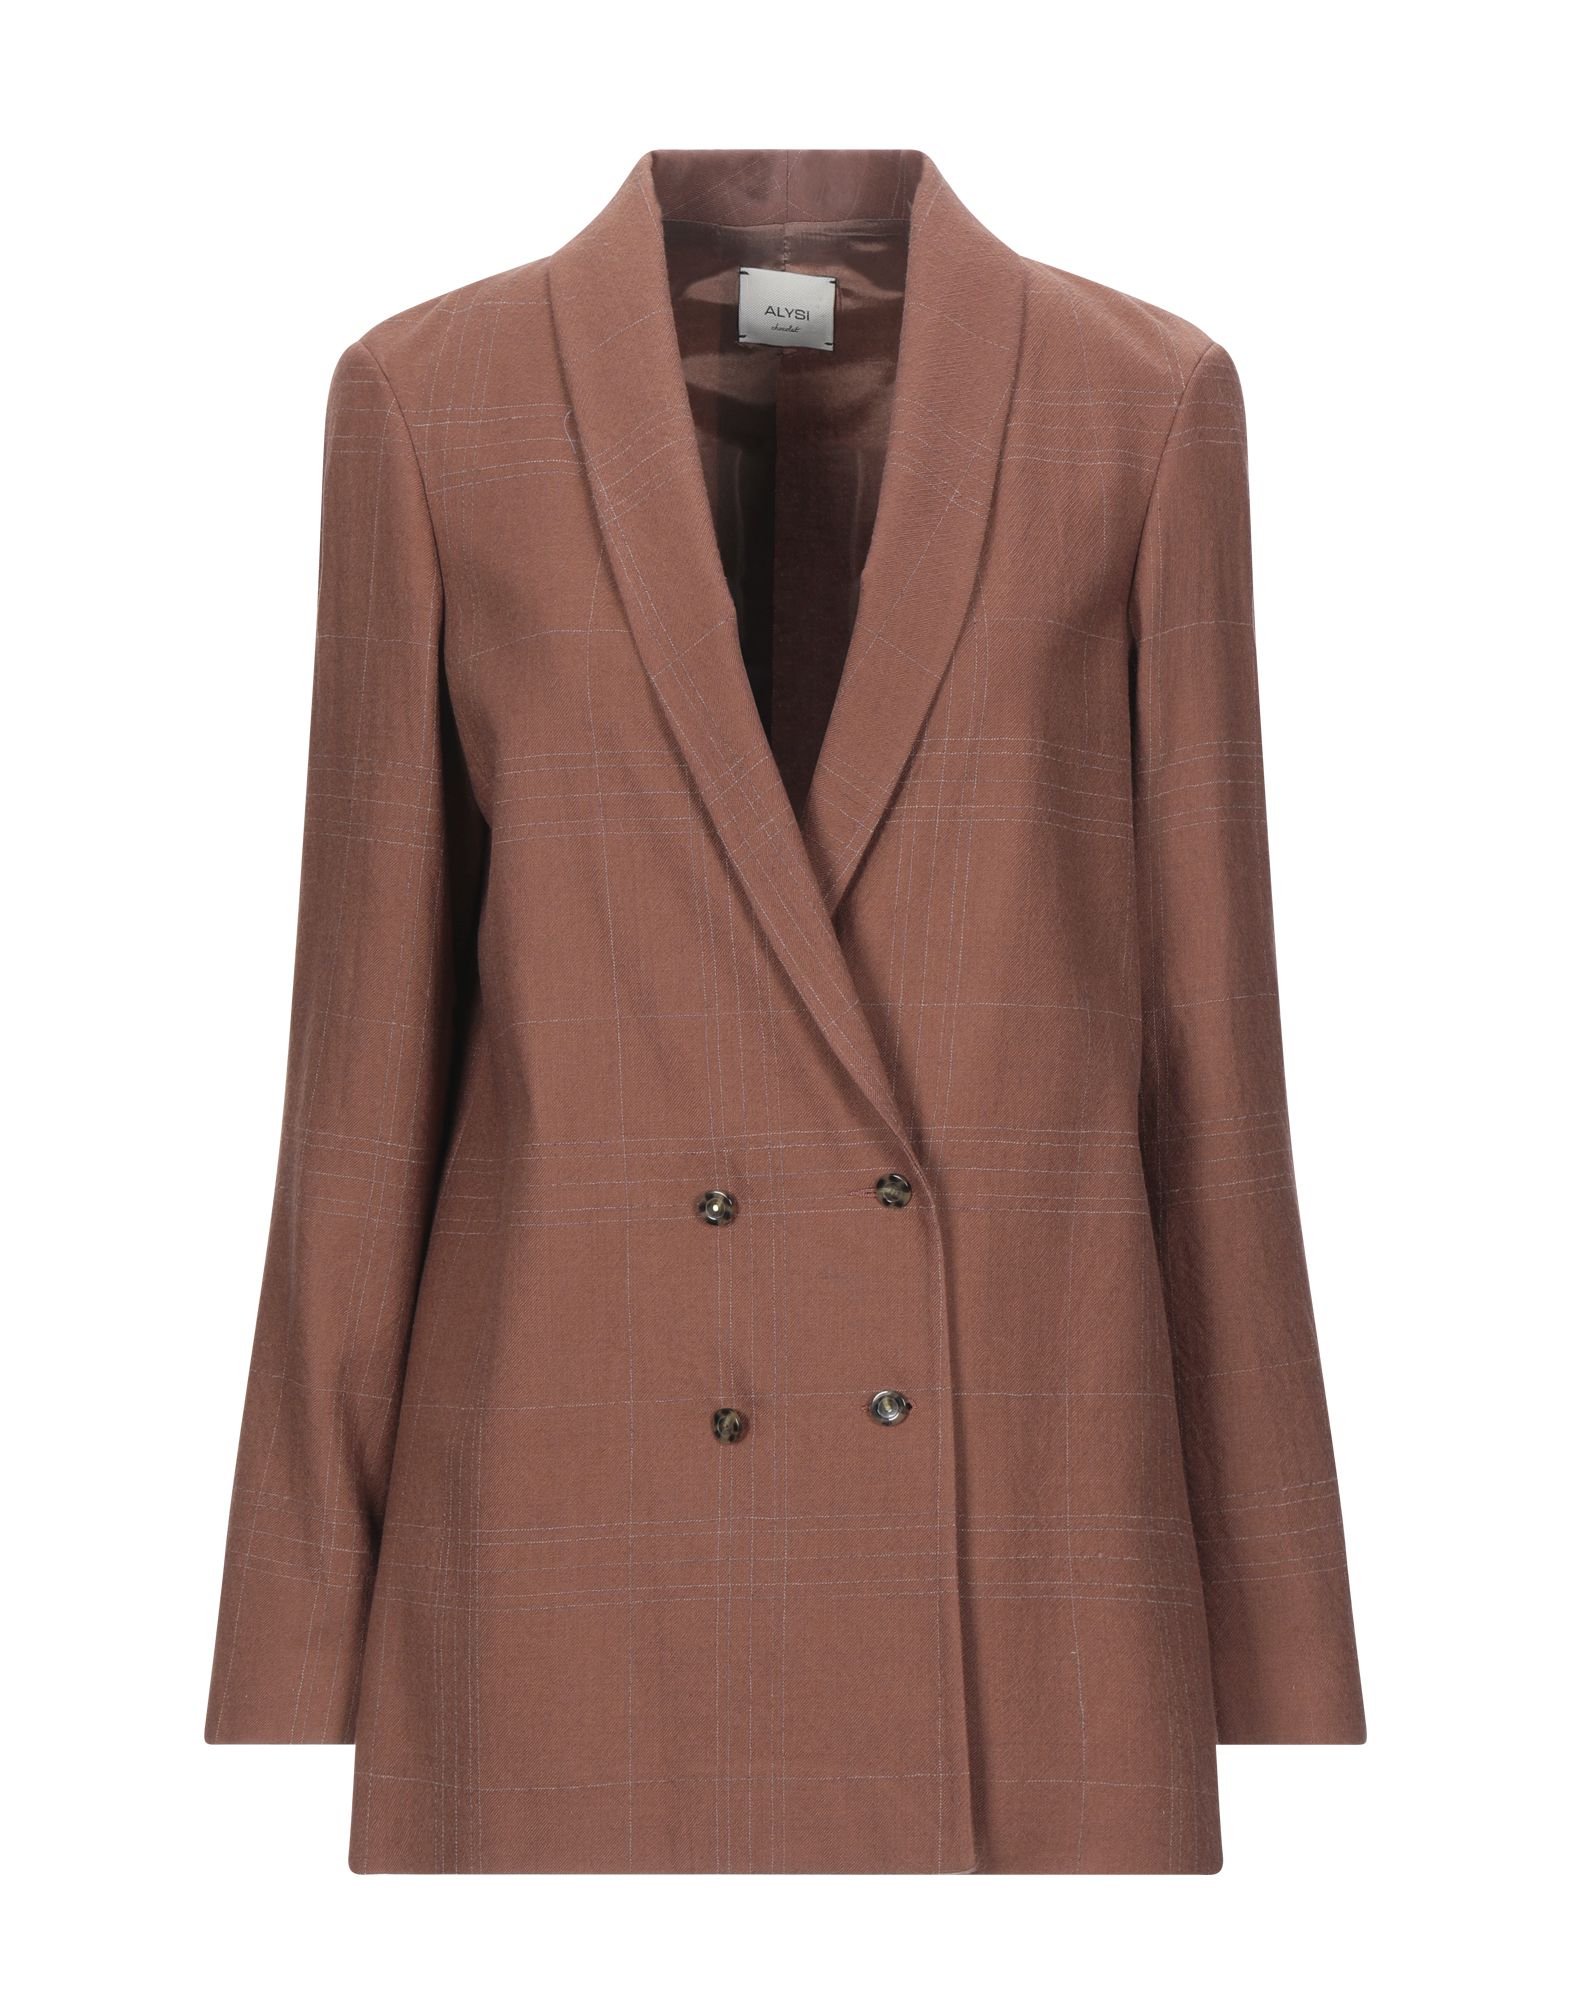 ALYSI Suit jackets - Item 49574084